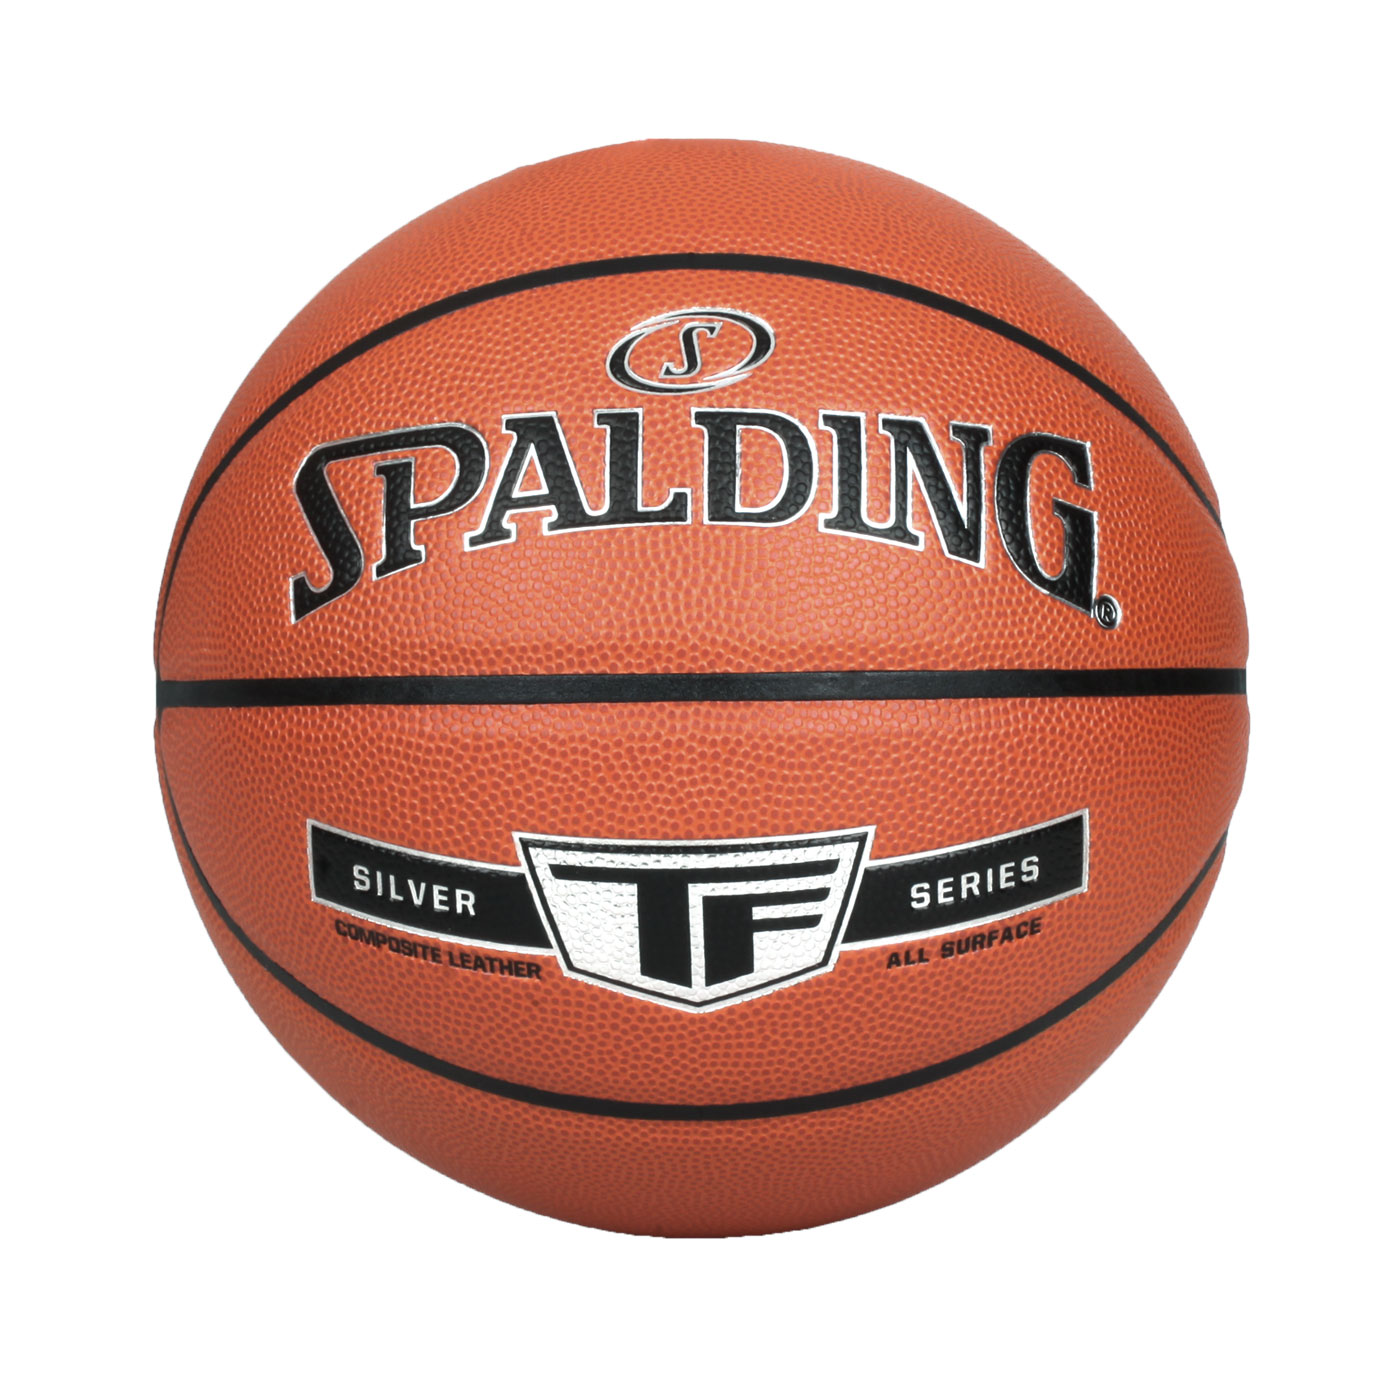 SPALDING TF #6合成皮籃球#41645 SPA76860 - 橘黑銀